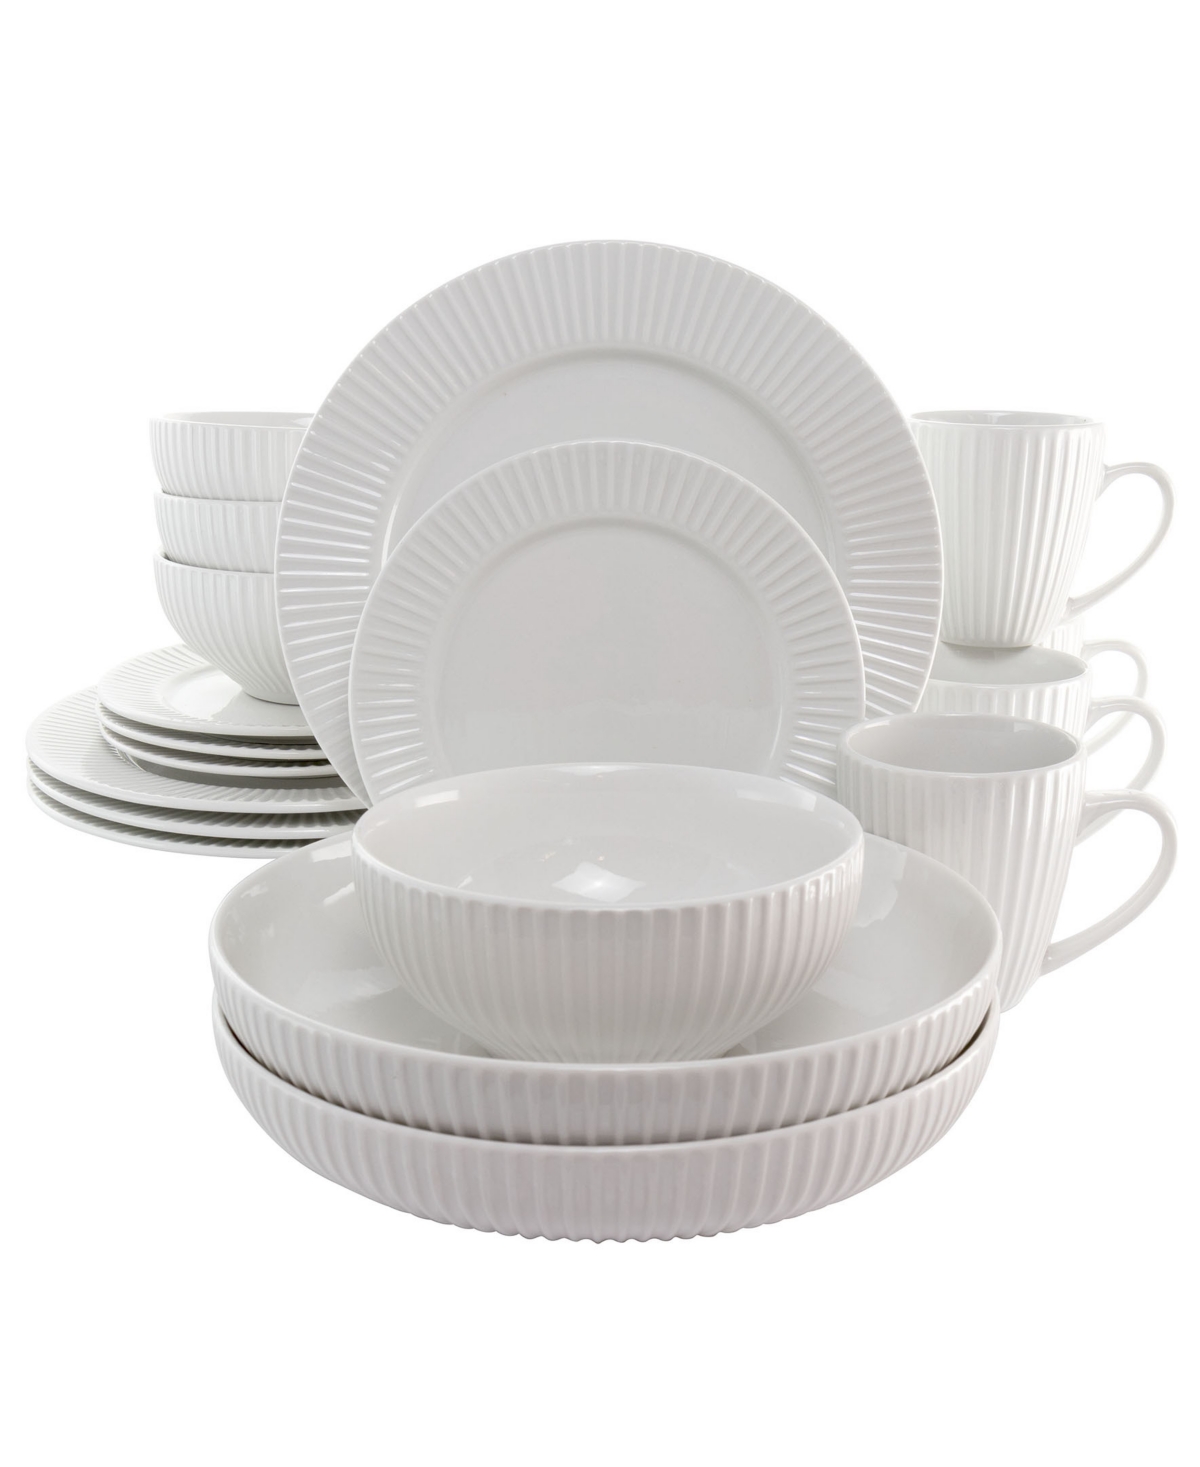 Elle Dinnerware Set of 18 Pieces - White